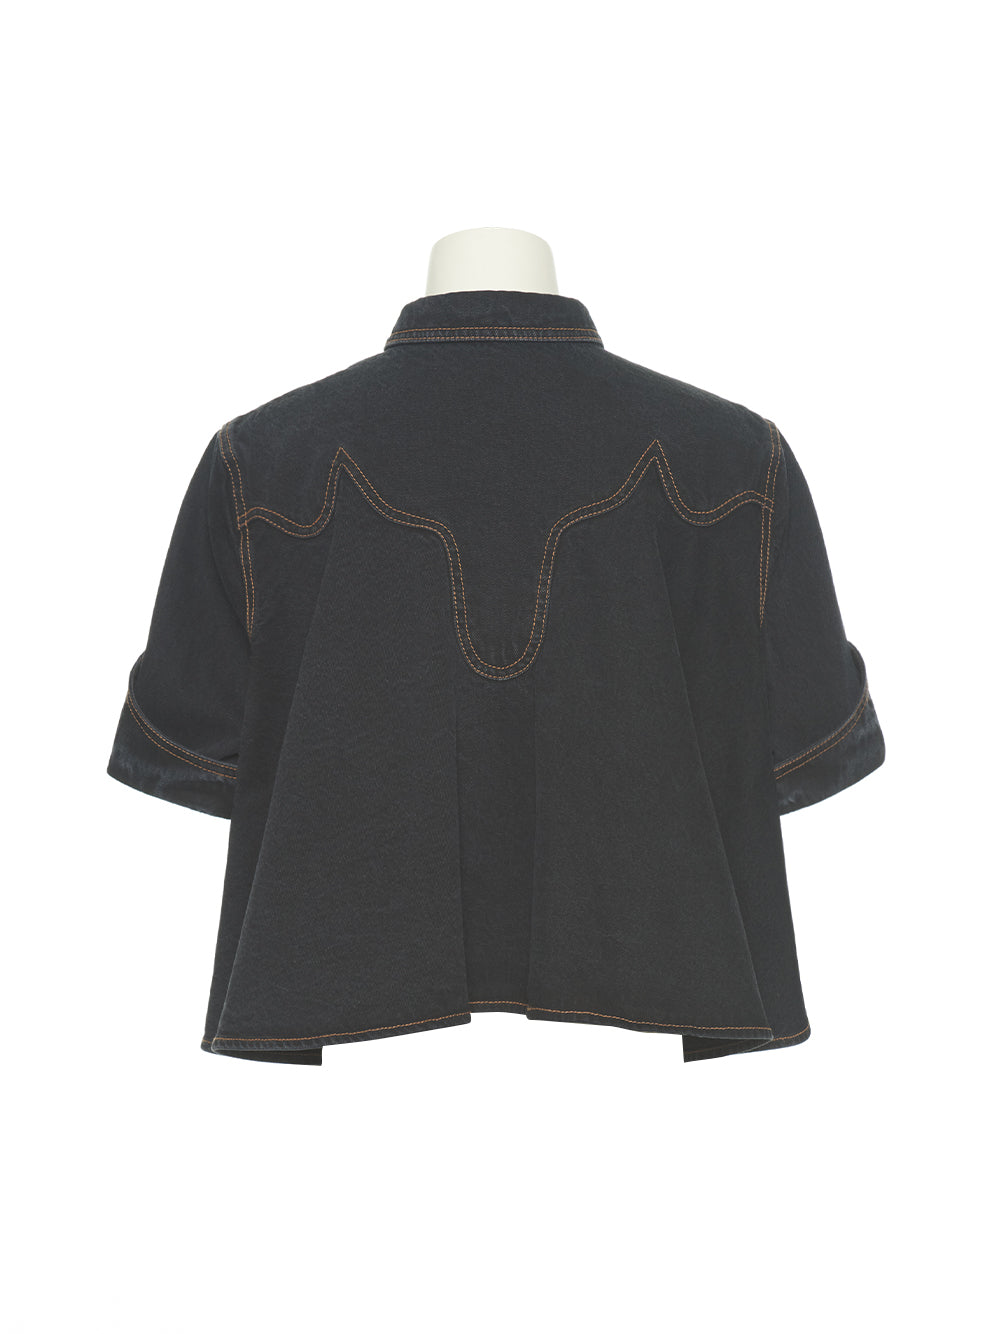 Western Pocket Crop Denim Shirt (Black)